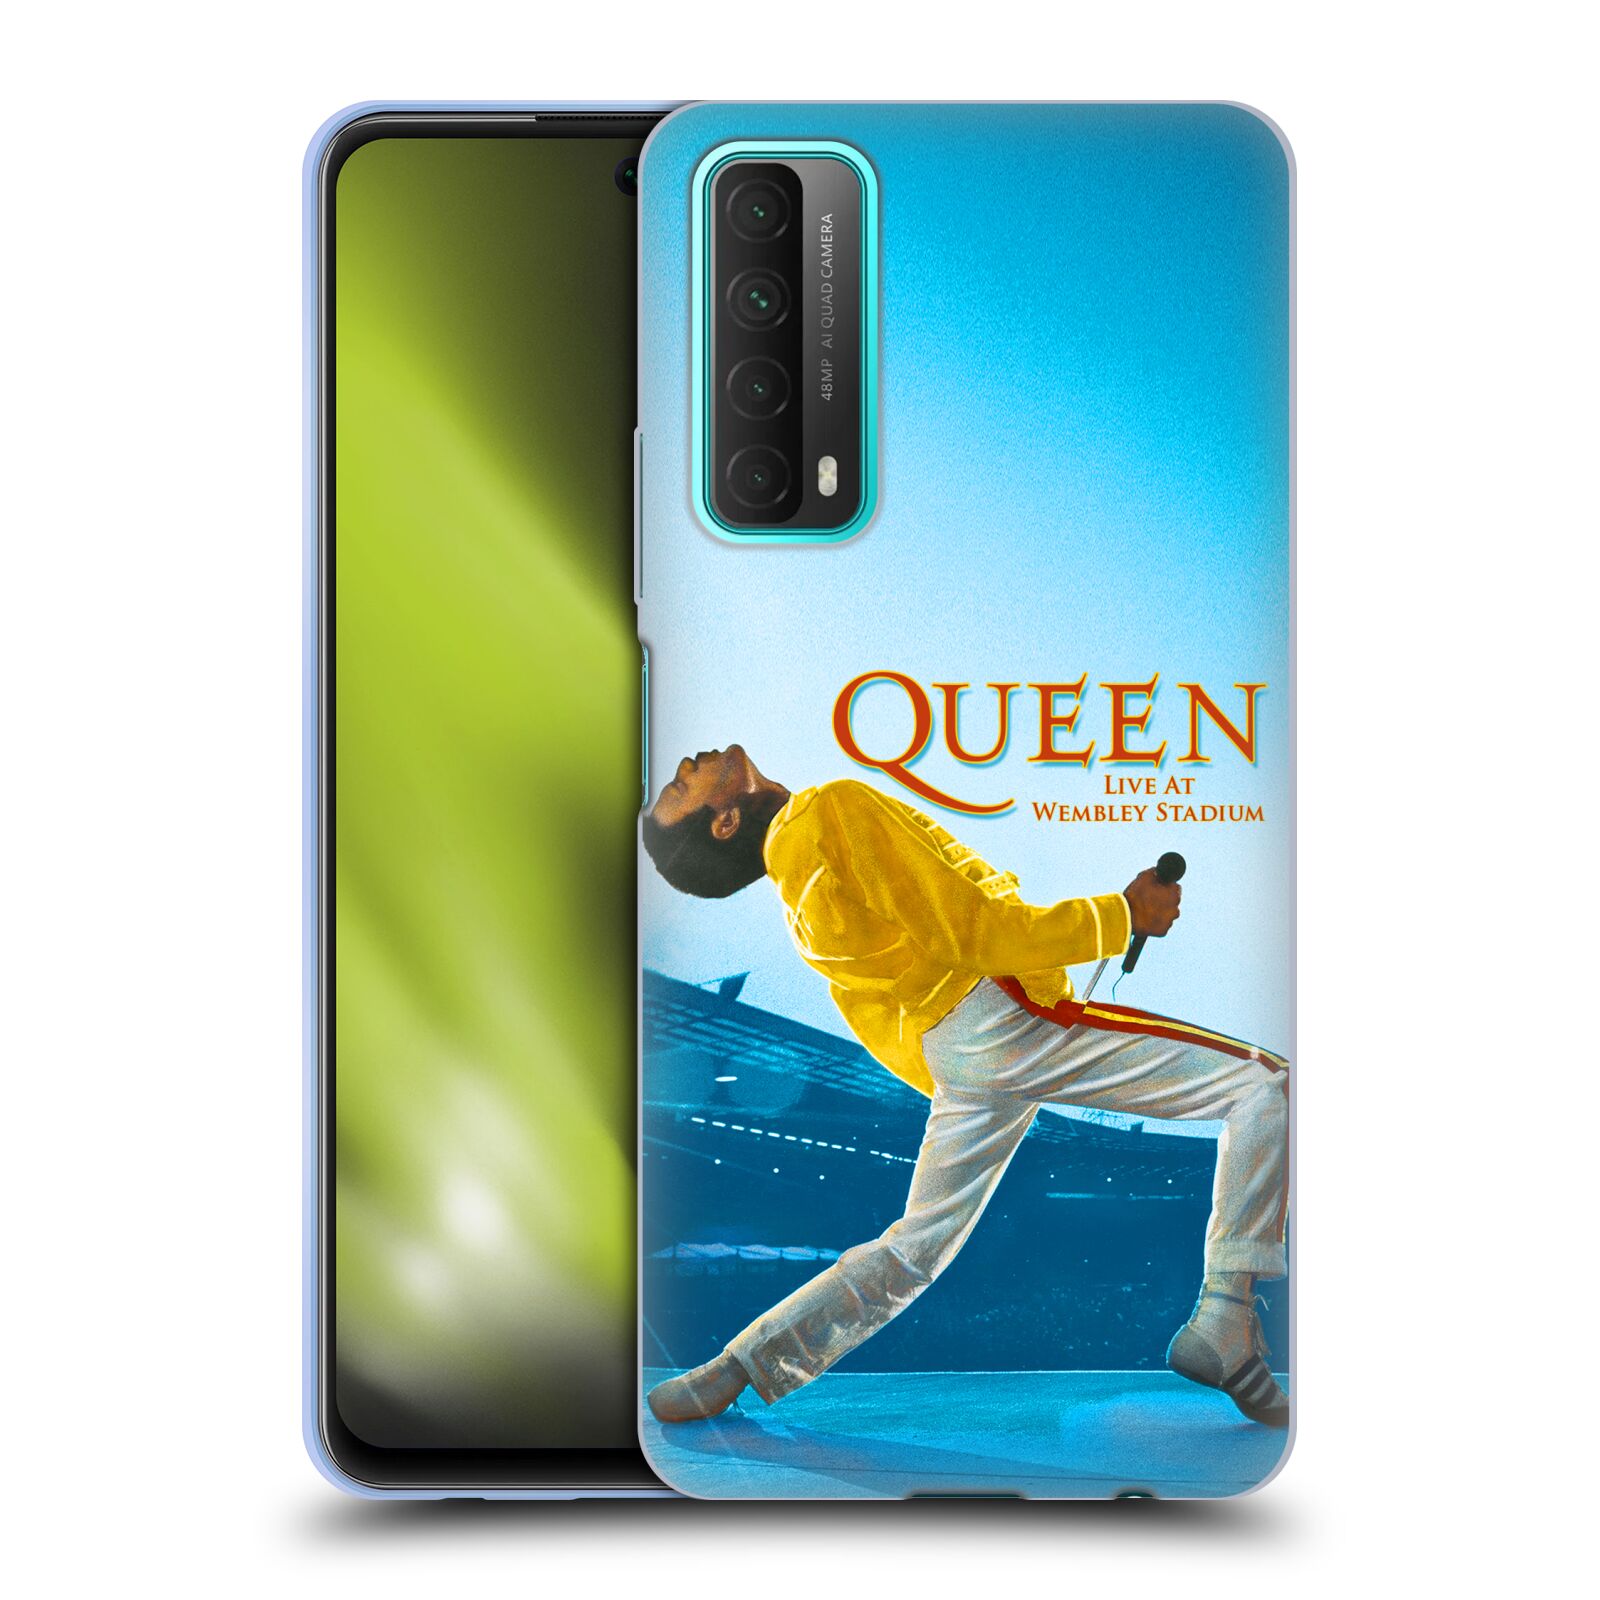 Silikonové pouzdro na mobil Huawei P Smart (2021) - Head Case - Queen - Freddie Mercury (Silikonový kryt, obal, pouzdro na mobilní telefon Huawei P Smart (2021) s motivem Queen - Freddie Mercury)